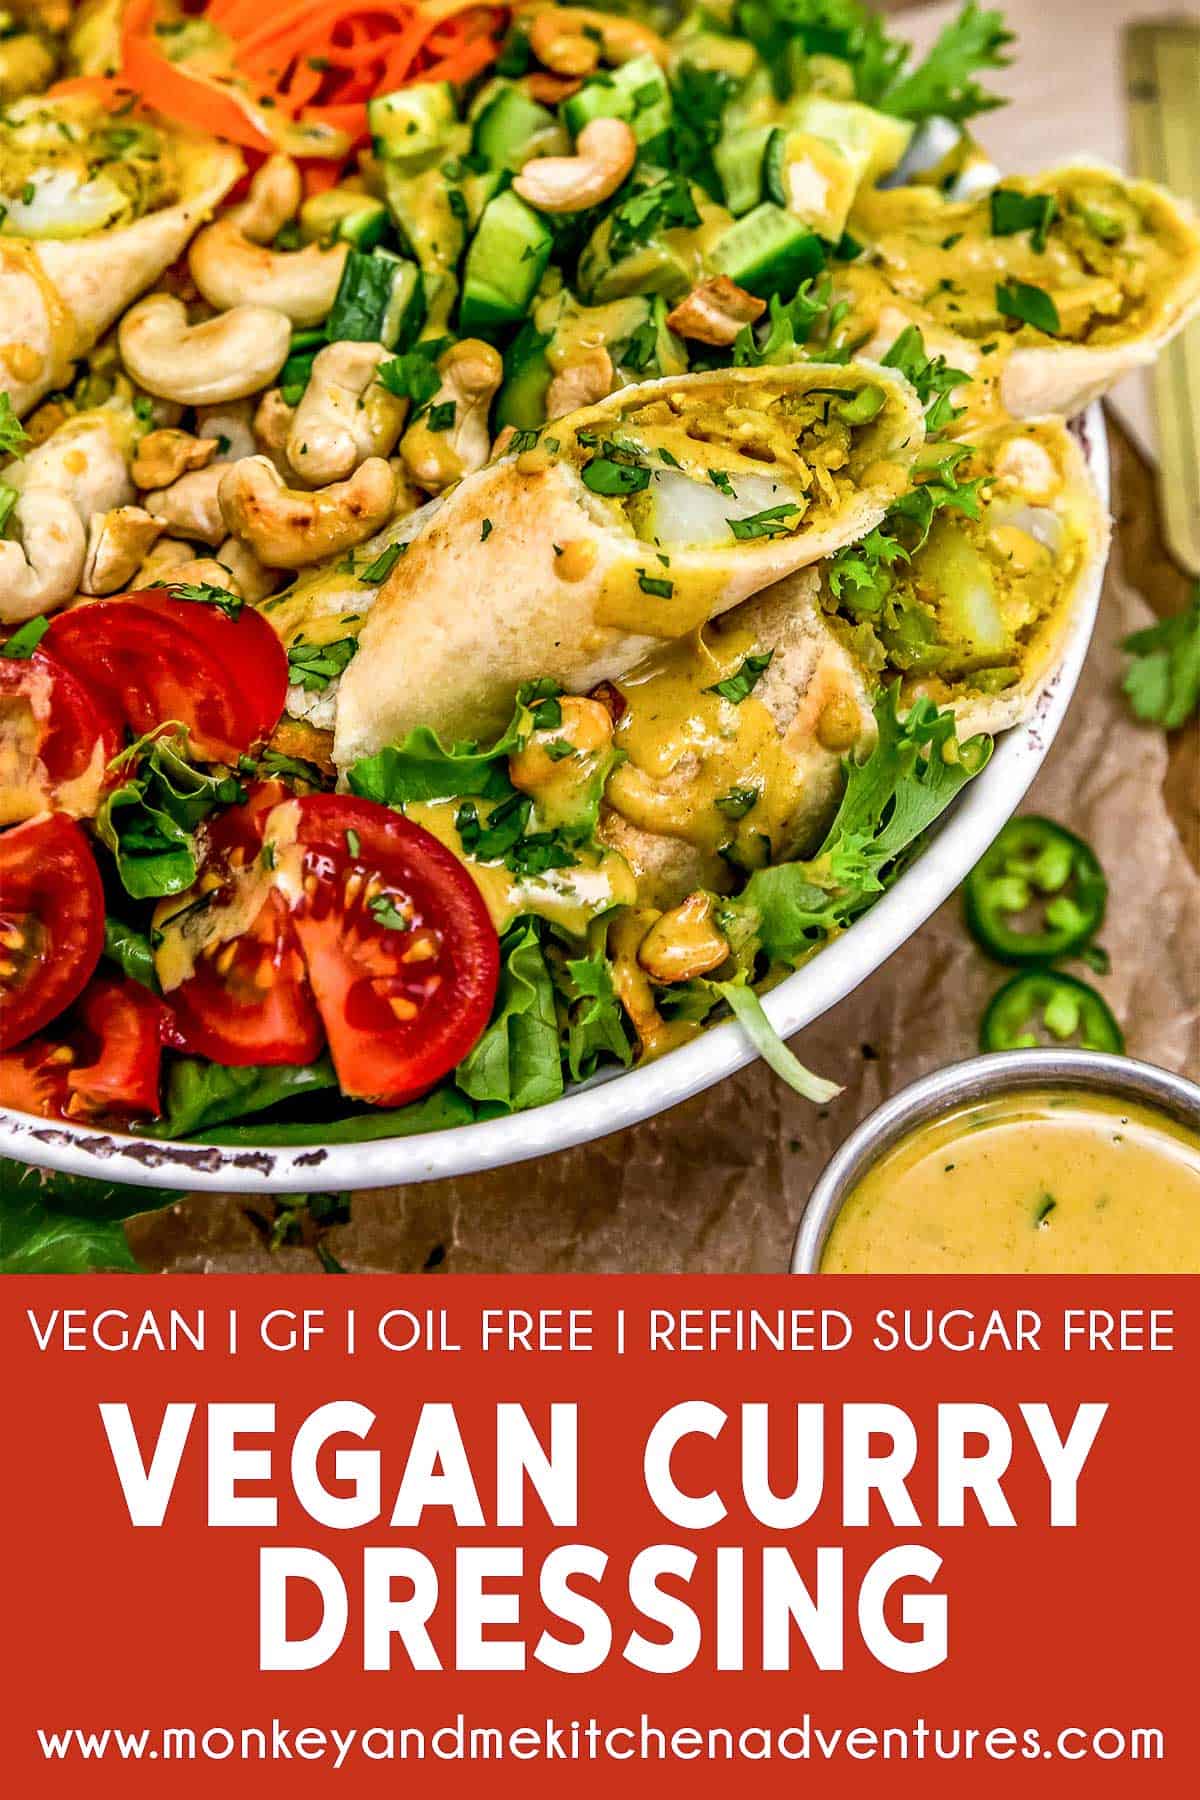 Vegan Curry Dressing with Text Description